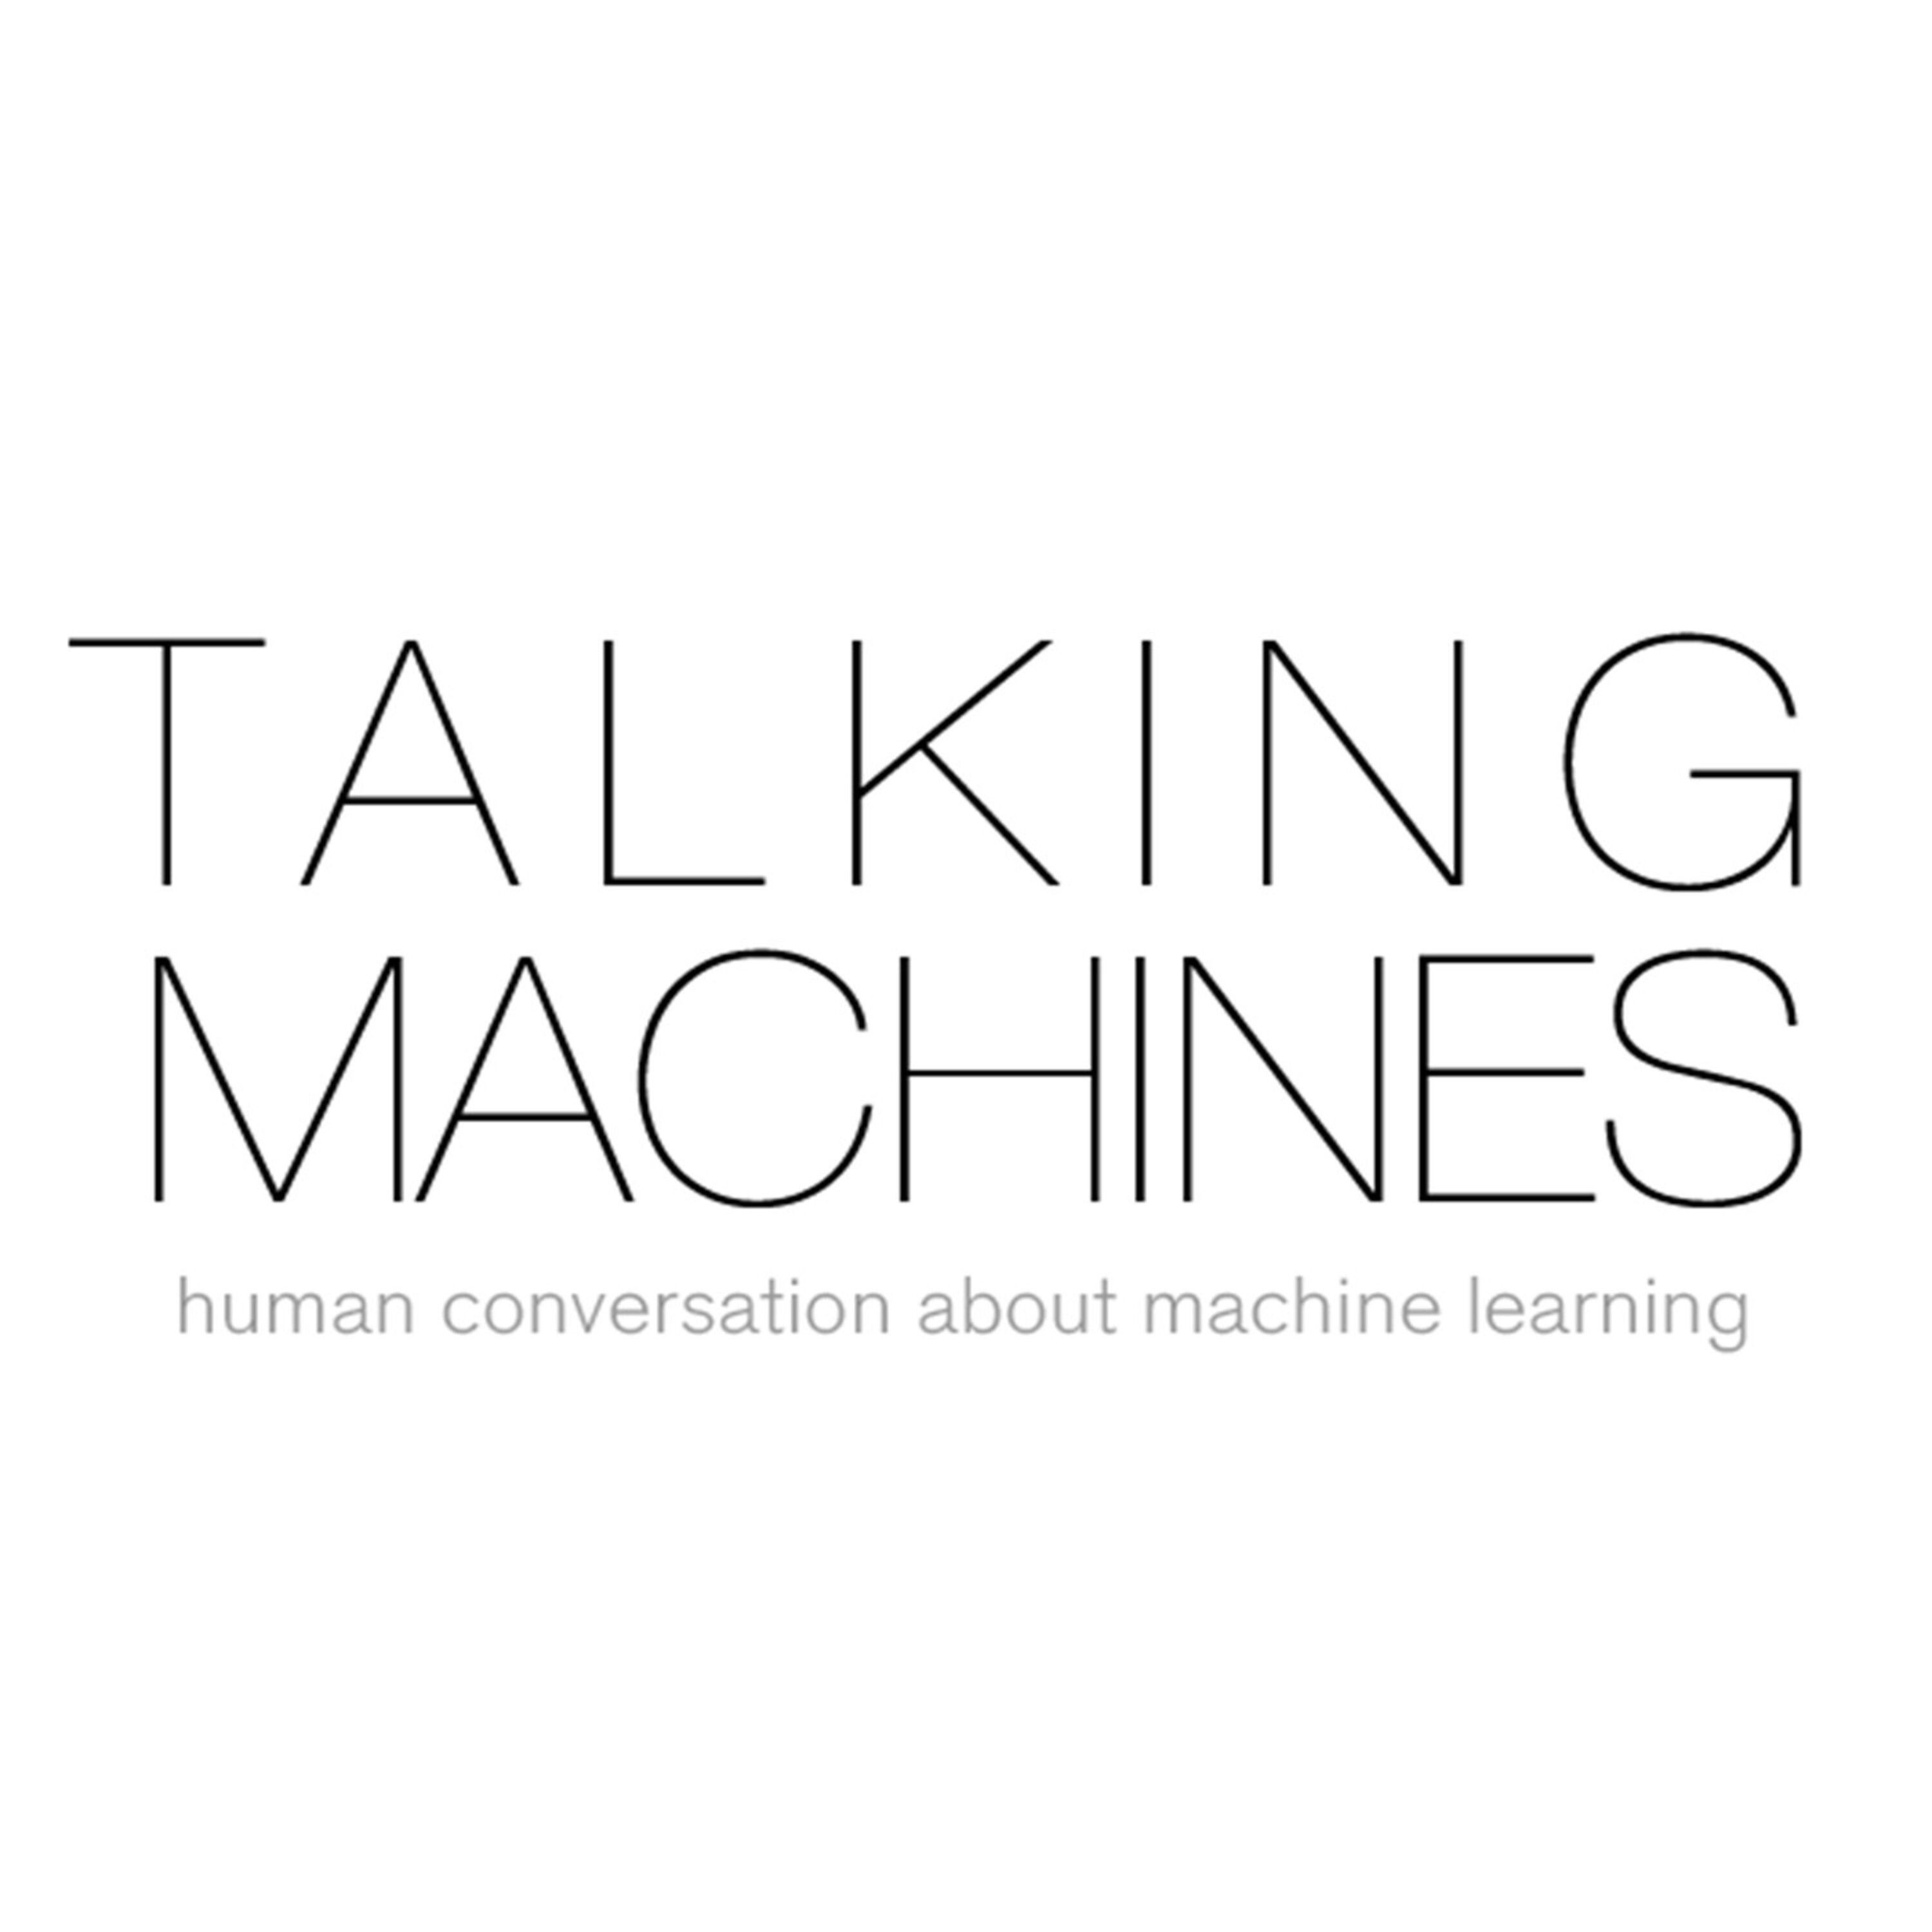 Robotics and Machine Learning Music Videos